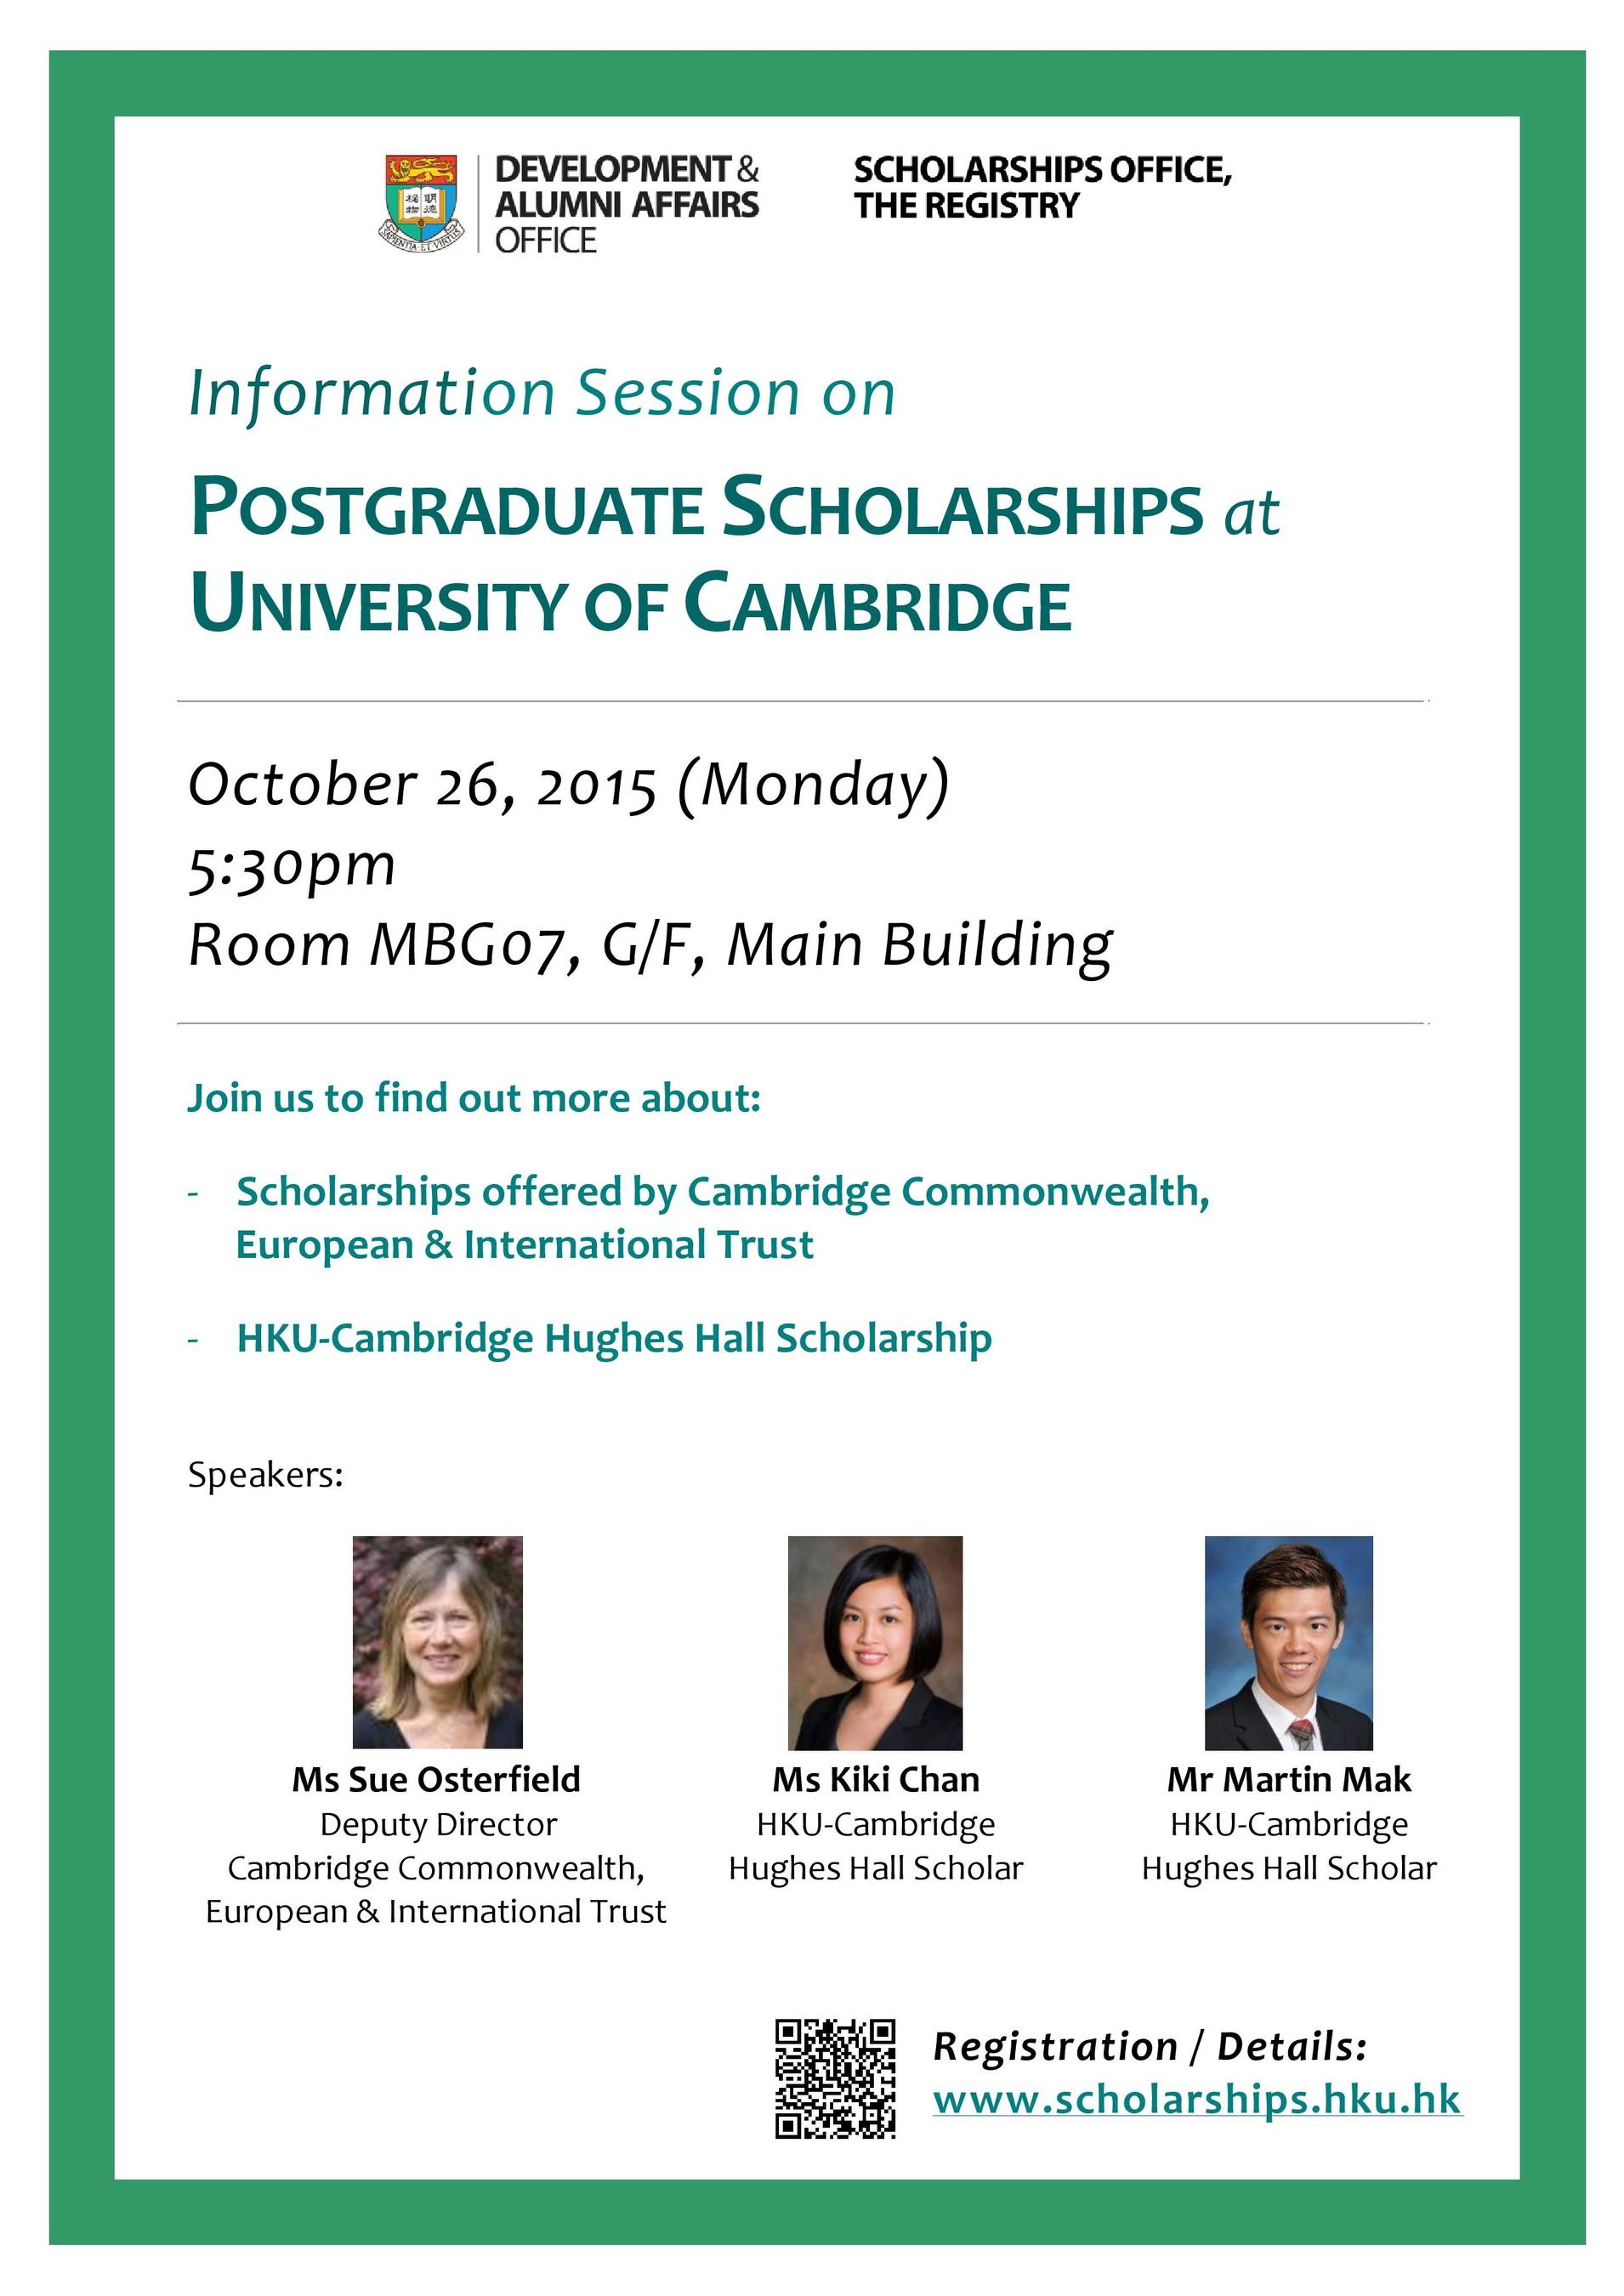 PG Scholarships at Cambridge